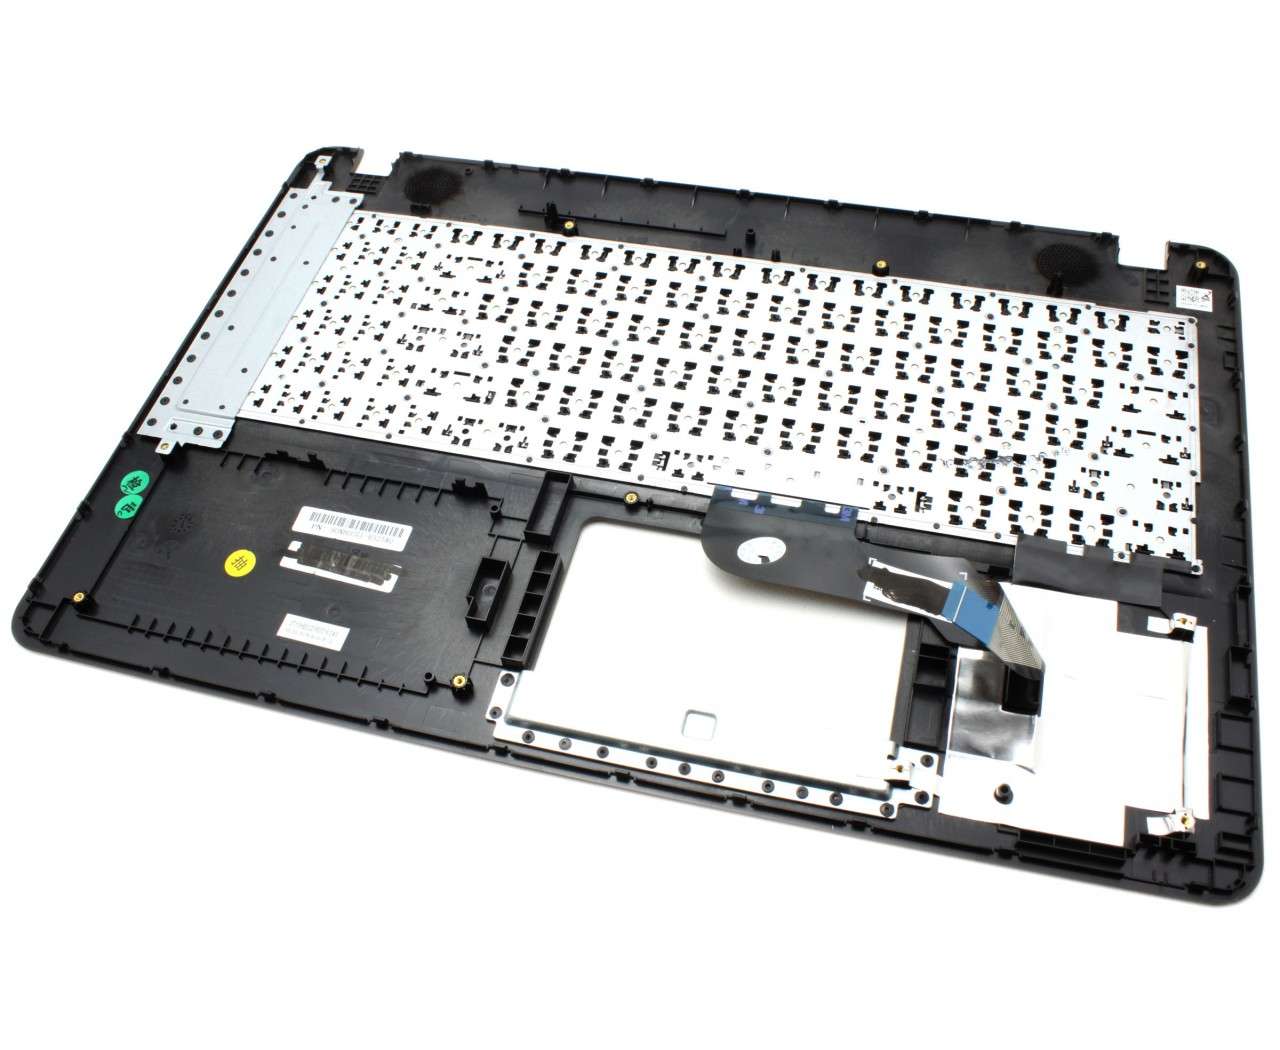 Tastatura Asus X541UA Neagra cu Palmrest Auriu